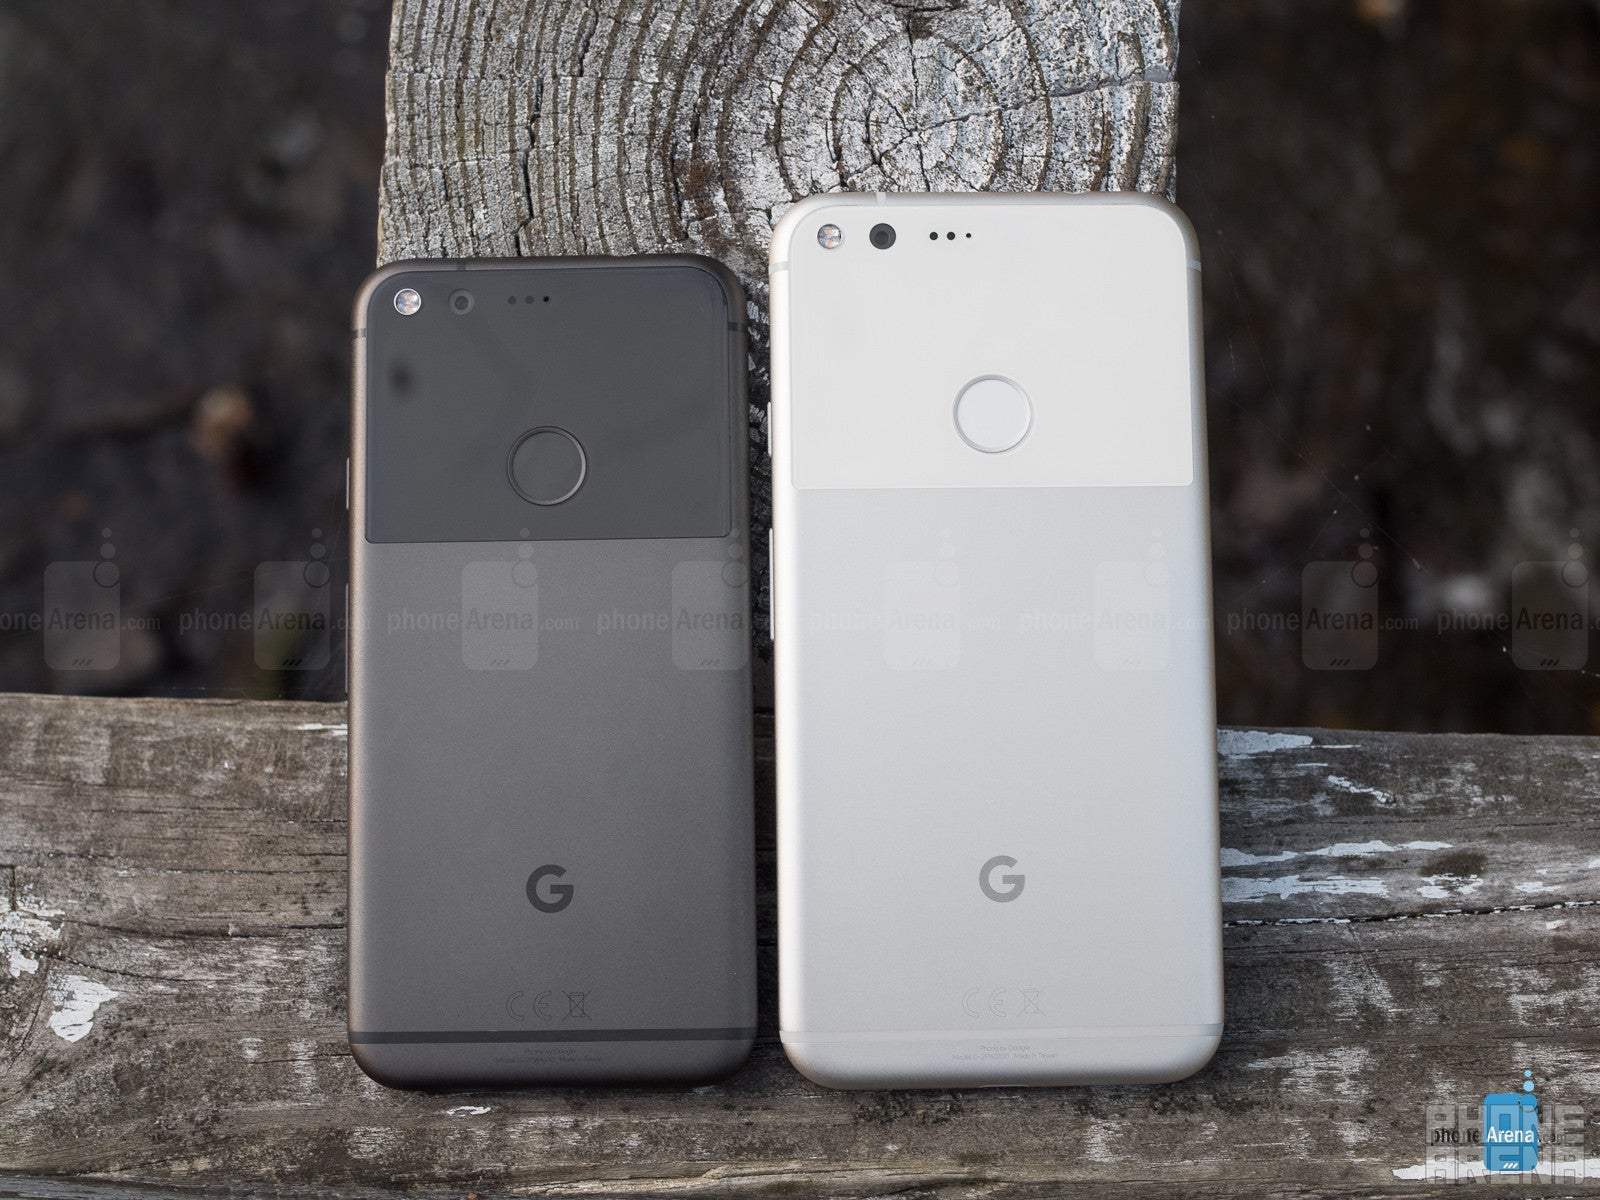 Google Pixel (left) and Google Pixel XL (right) - Google Pixel Review